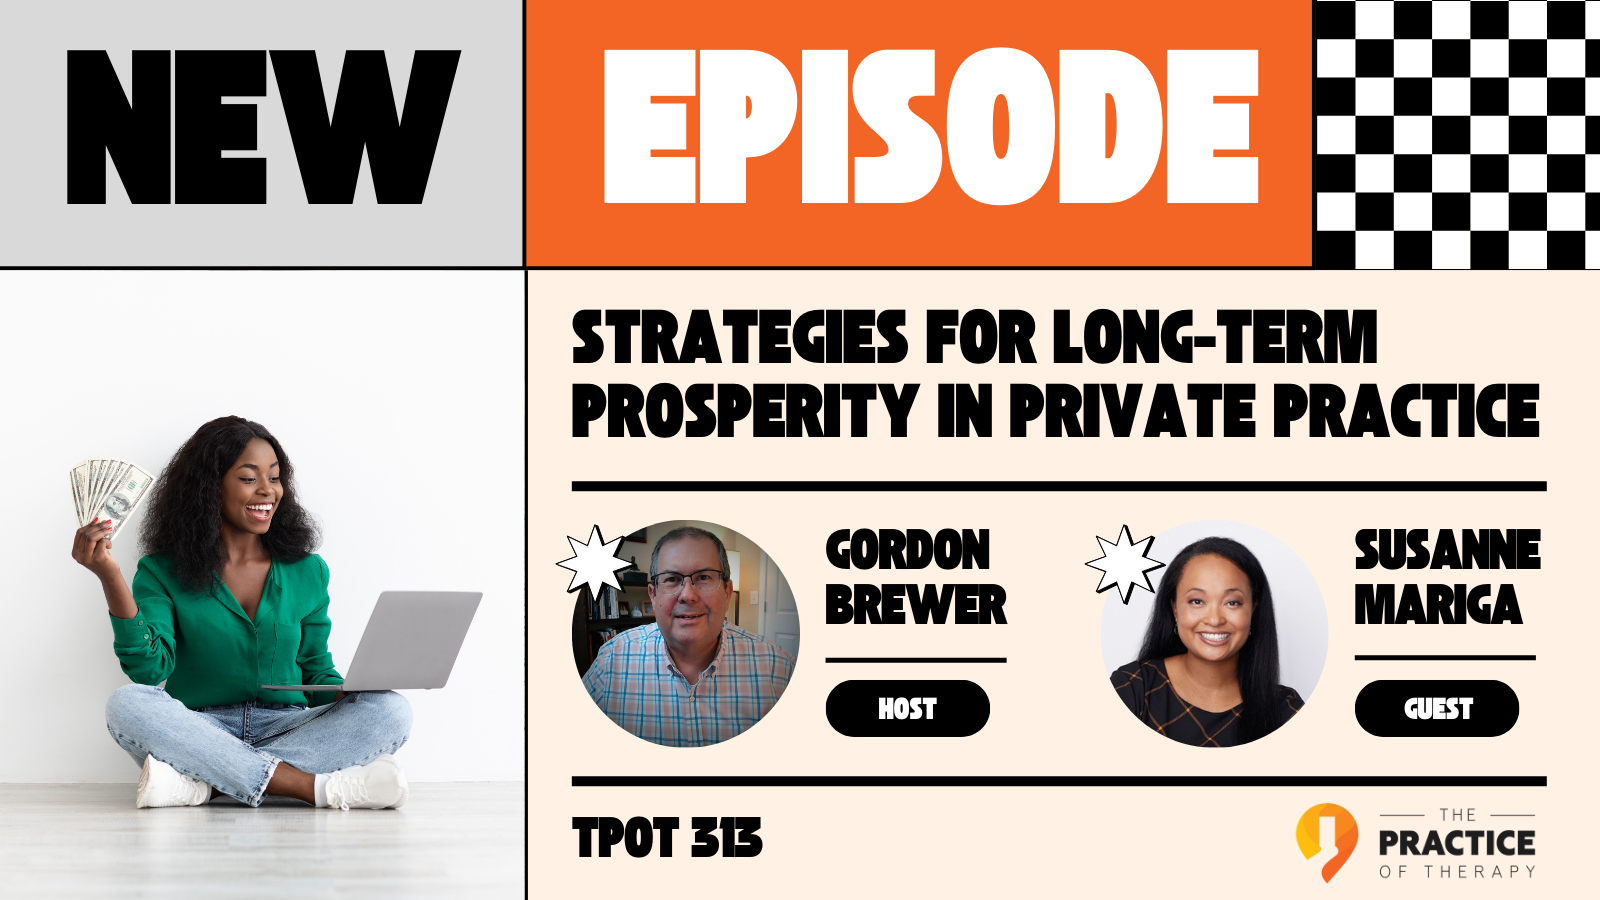 Susanne Mariga Strategies for Long-Term Prosperity in Private Practice TPOT 313